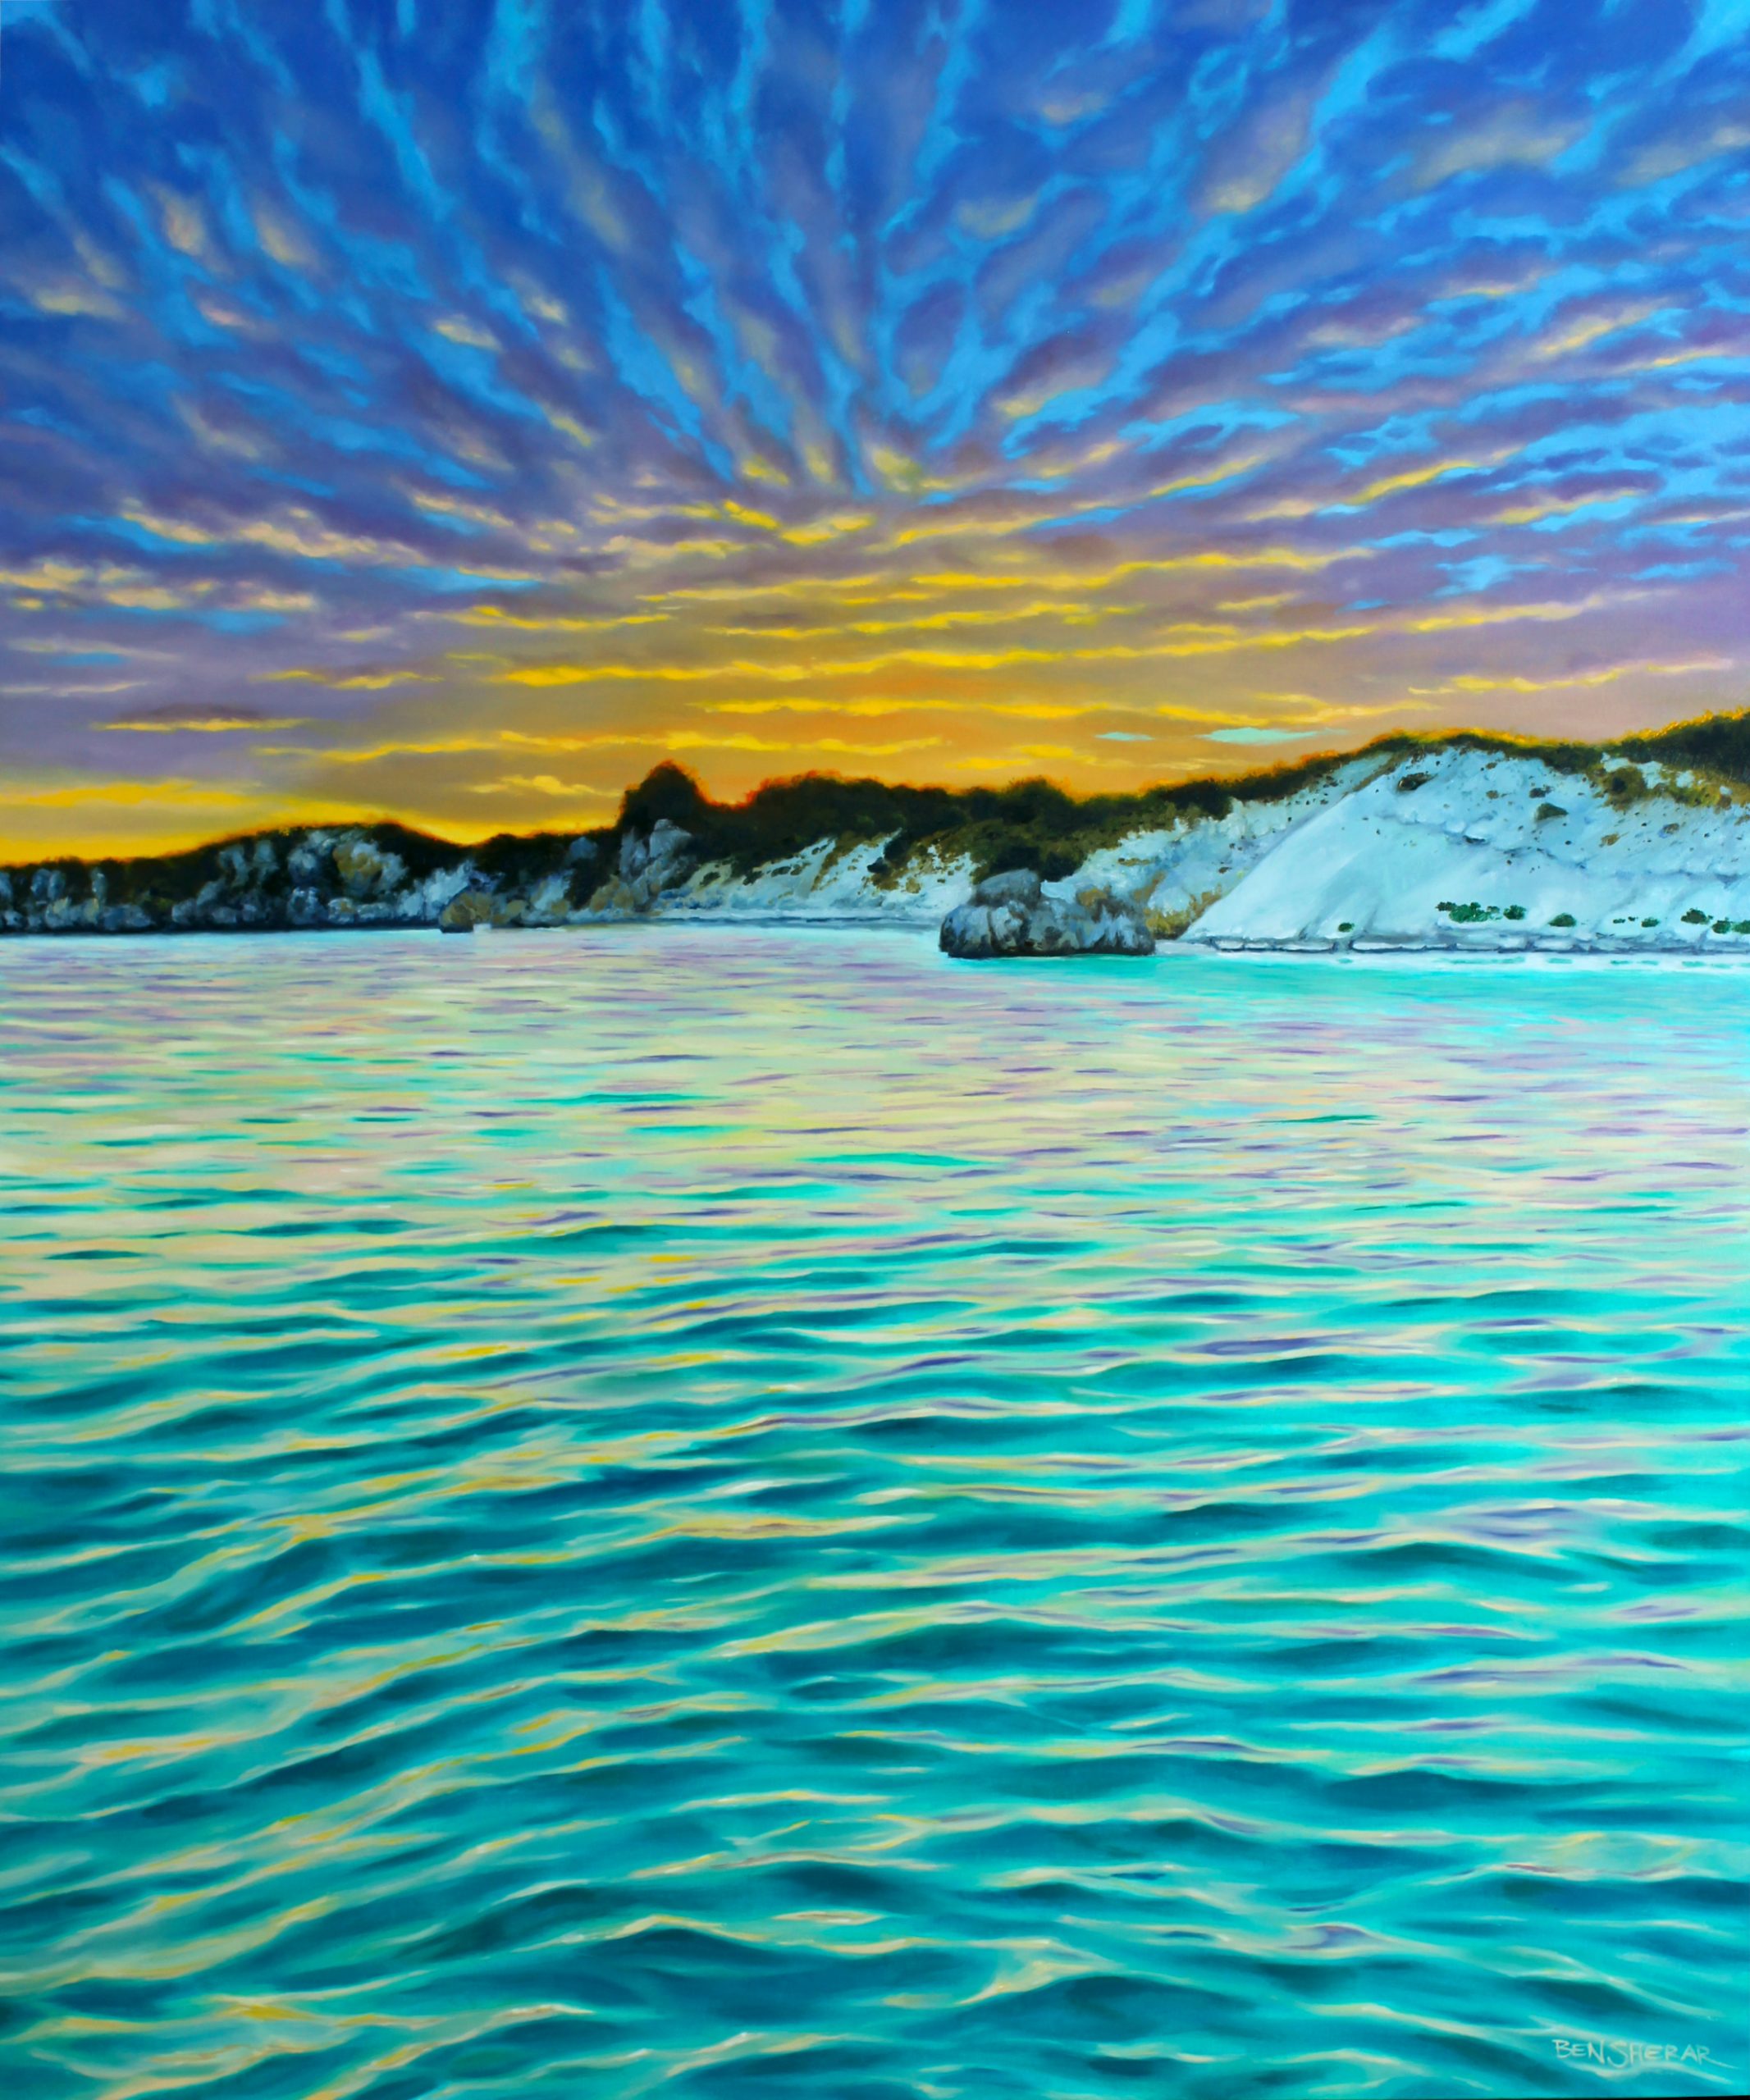 An original oil painting by Western Australian Artist Ben Sherar depicting a sunset over Garden Island off the coast of Perth